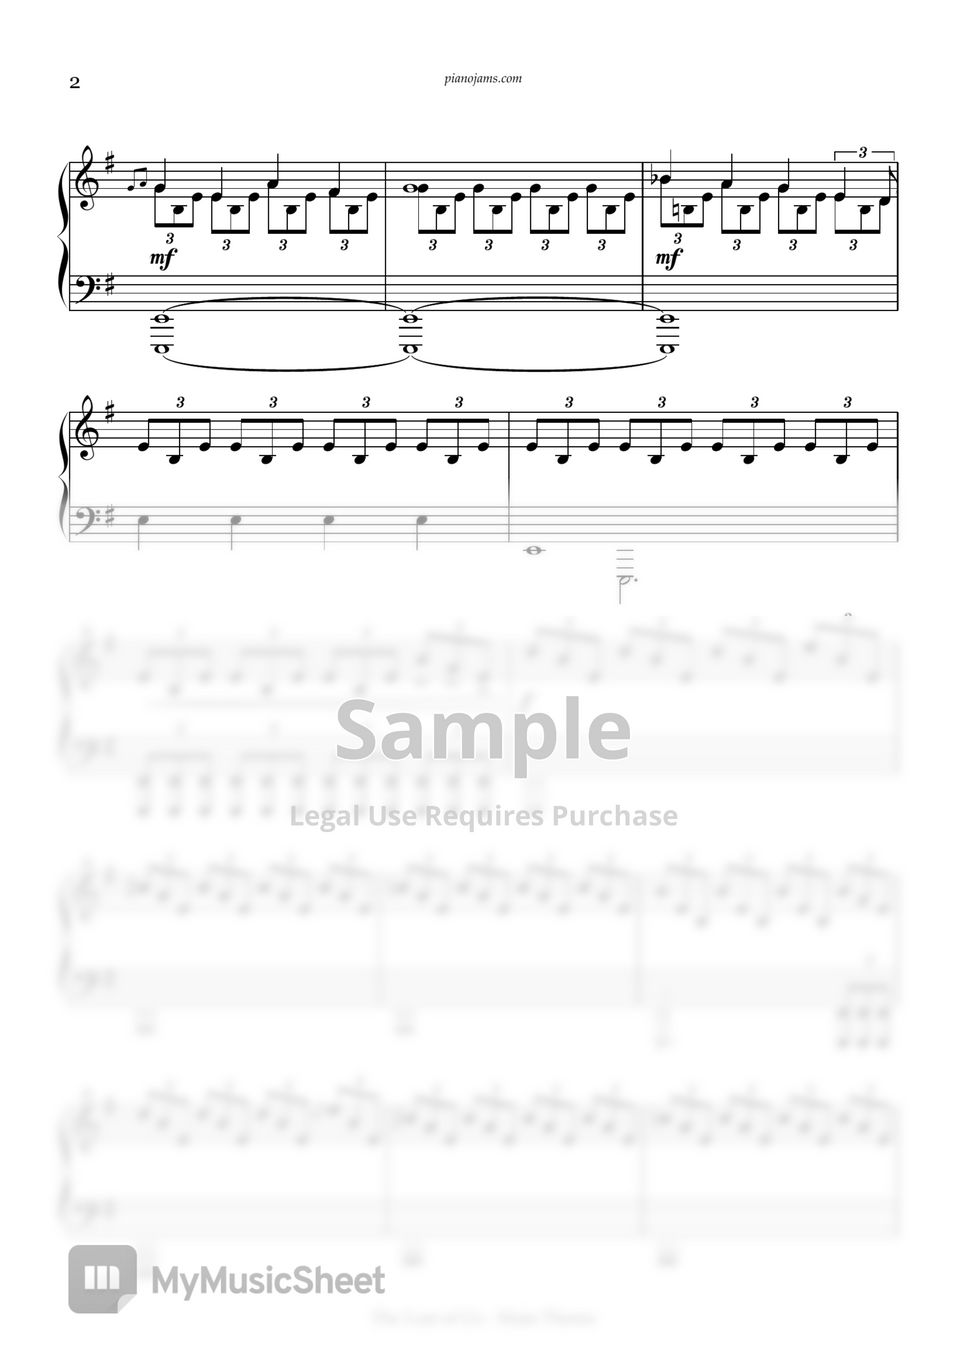 Gustavo Santaolalla - The Last Of Us - Main Theme (The Last of Us) by PIANOJAMS